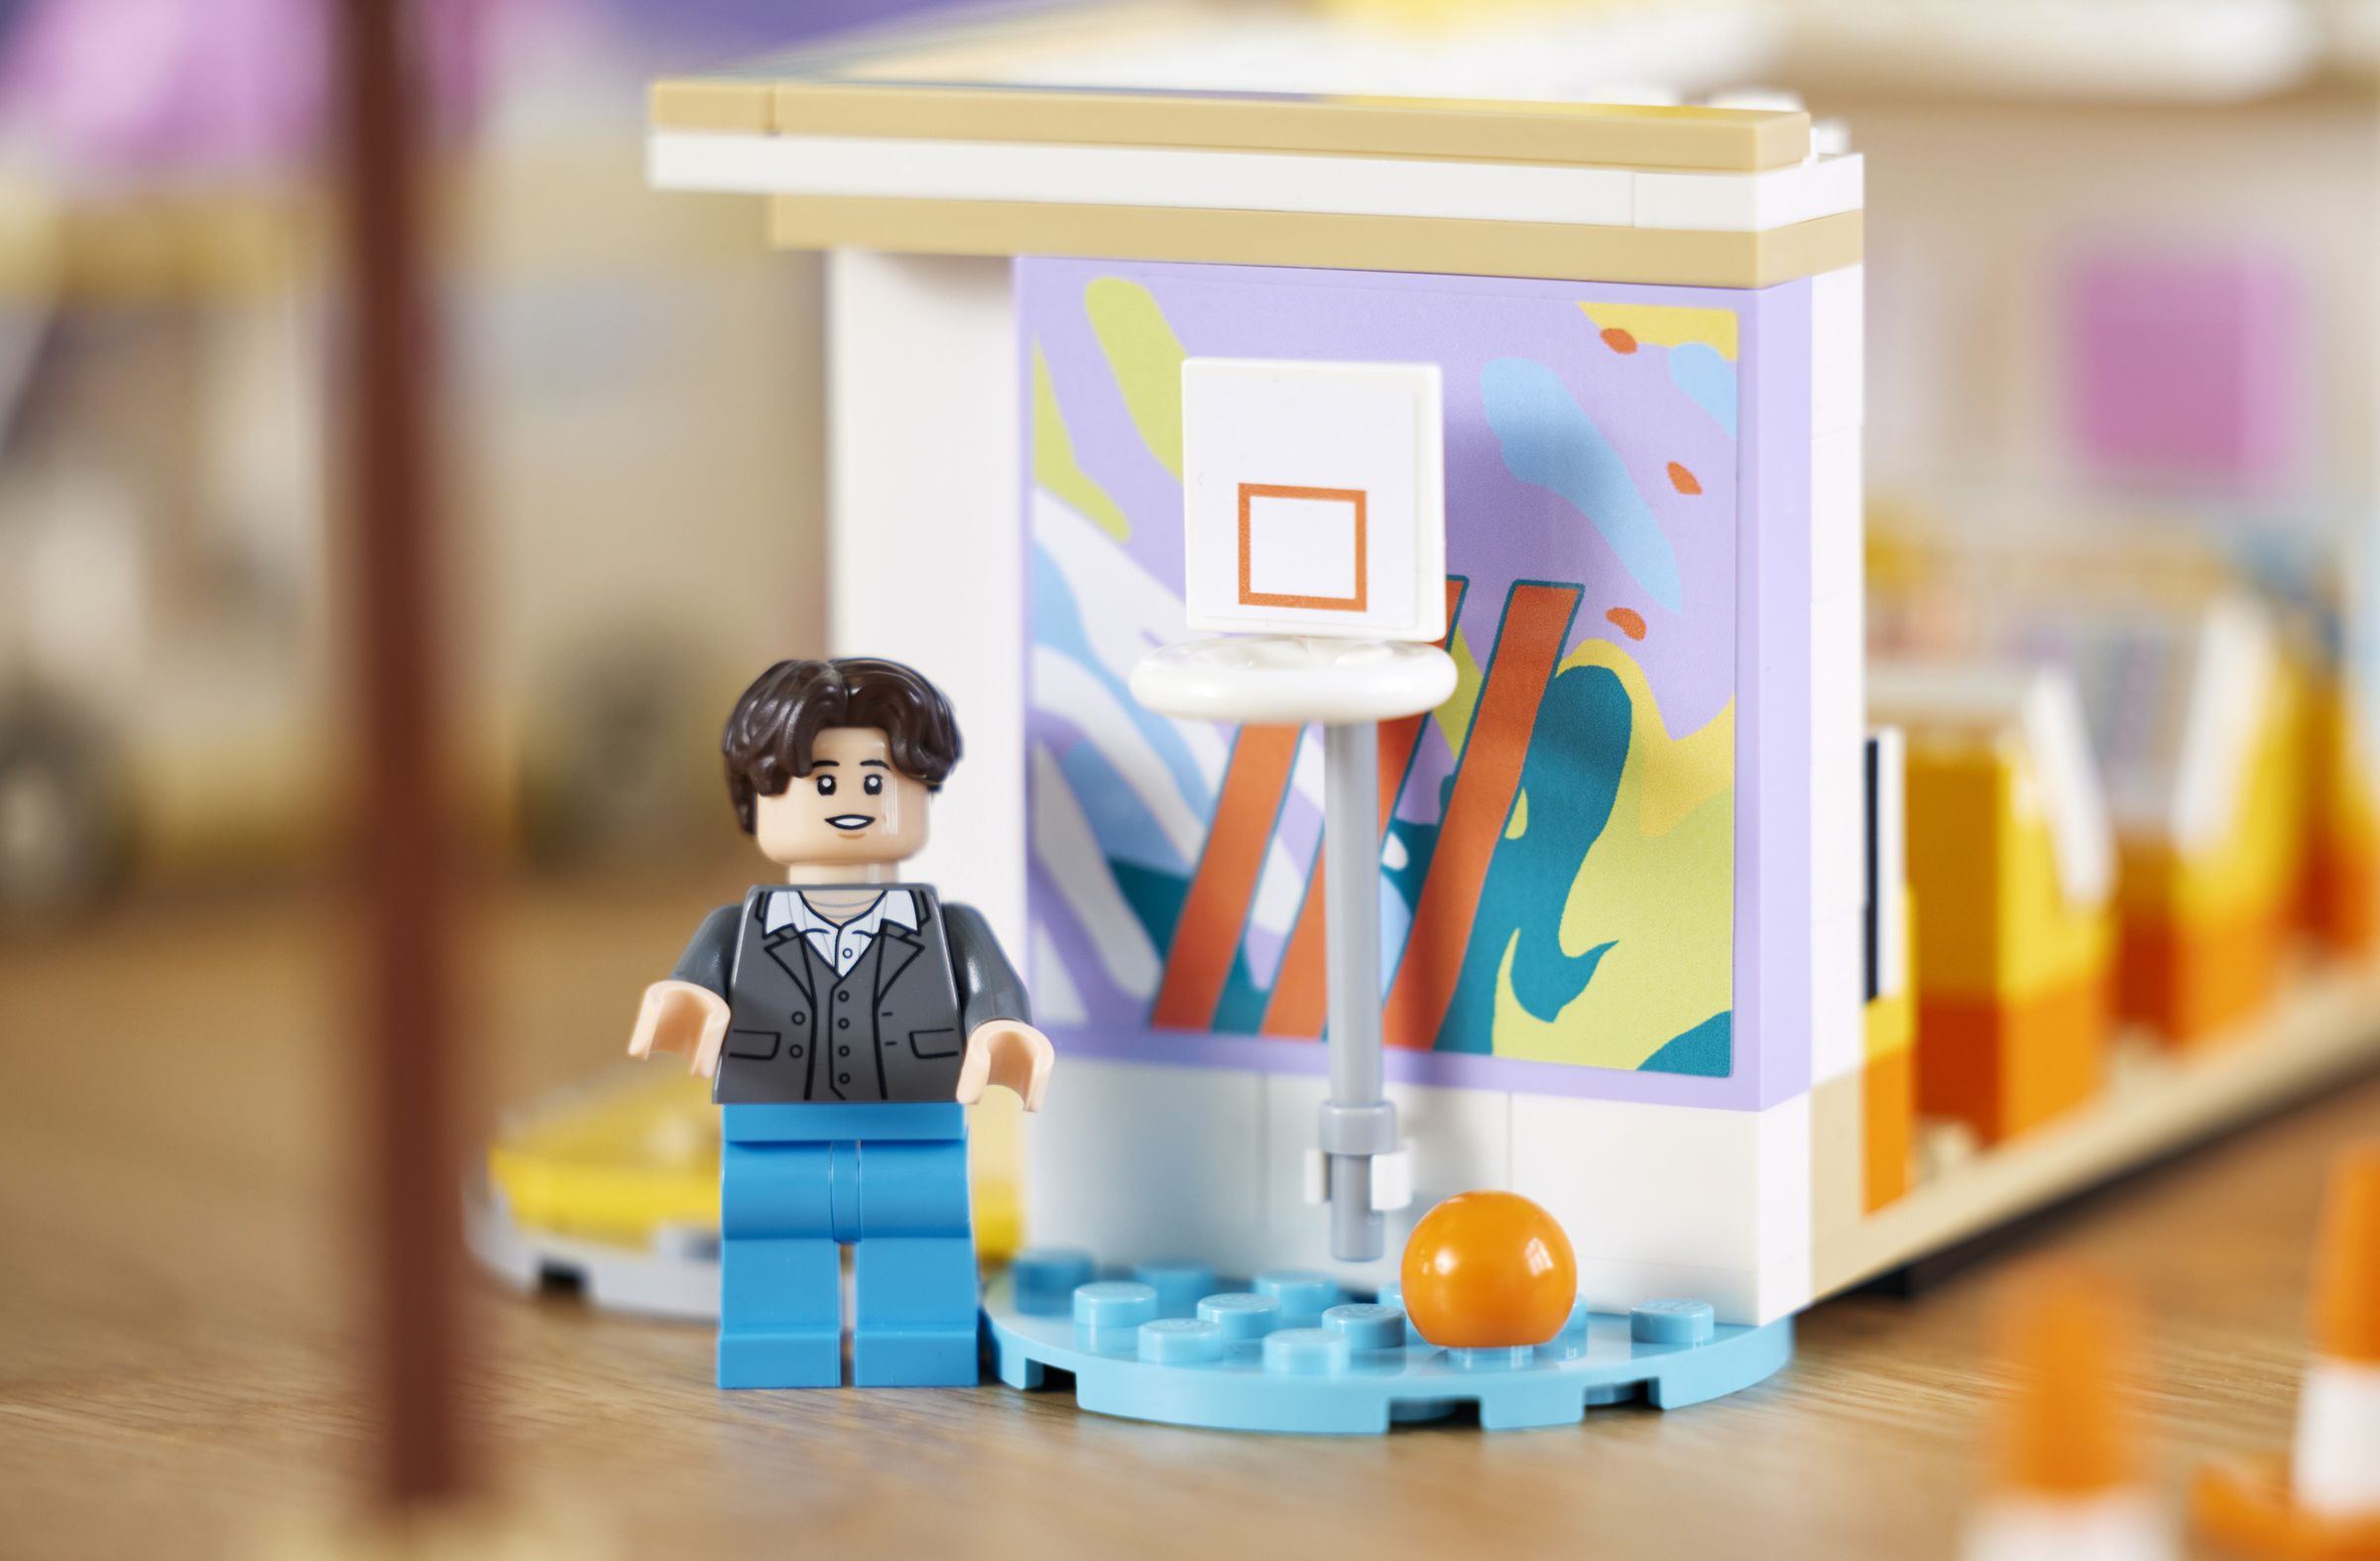 Suga Lego figurine beside a Lego basketball hoop.